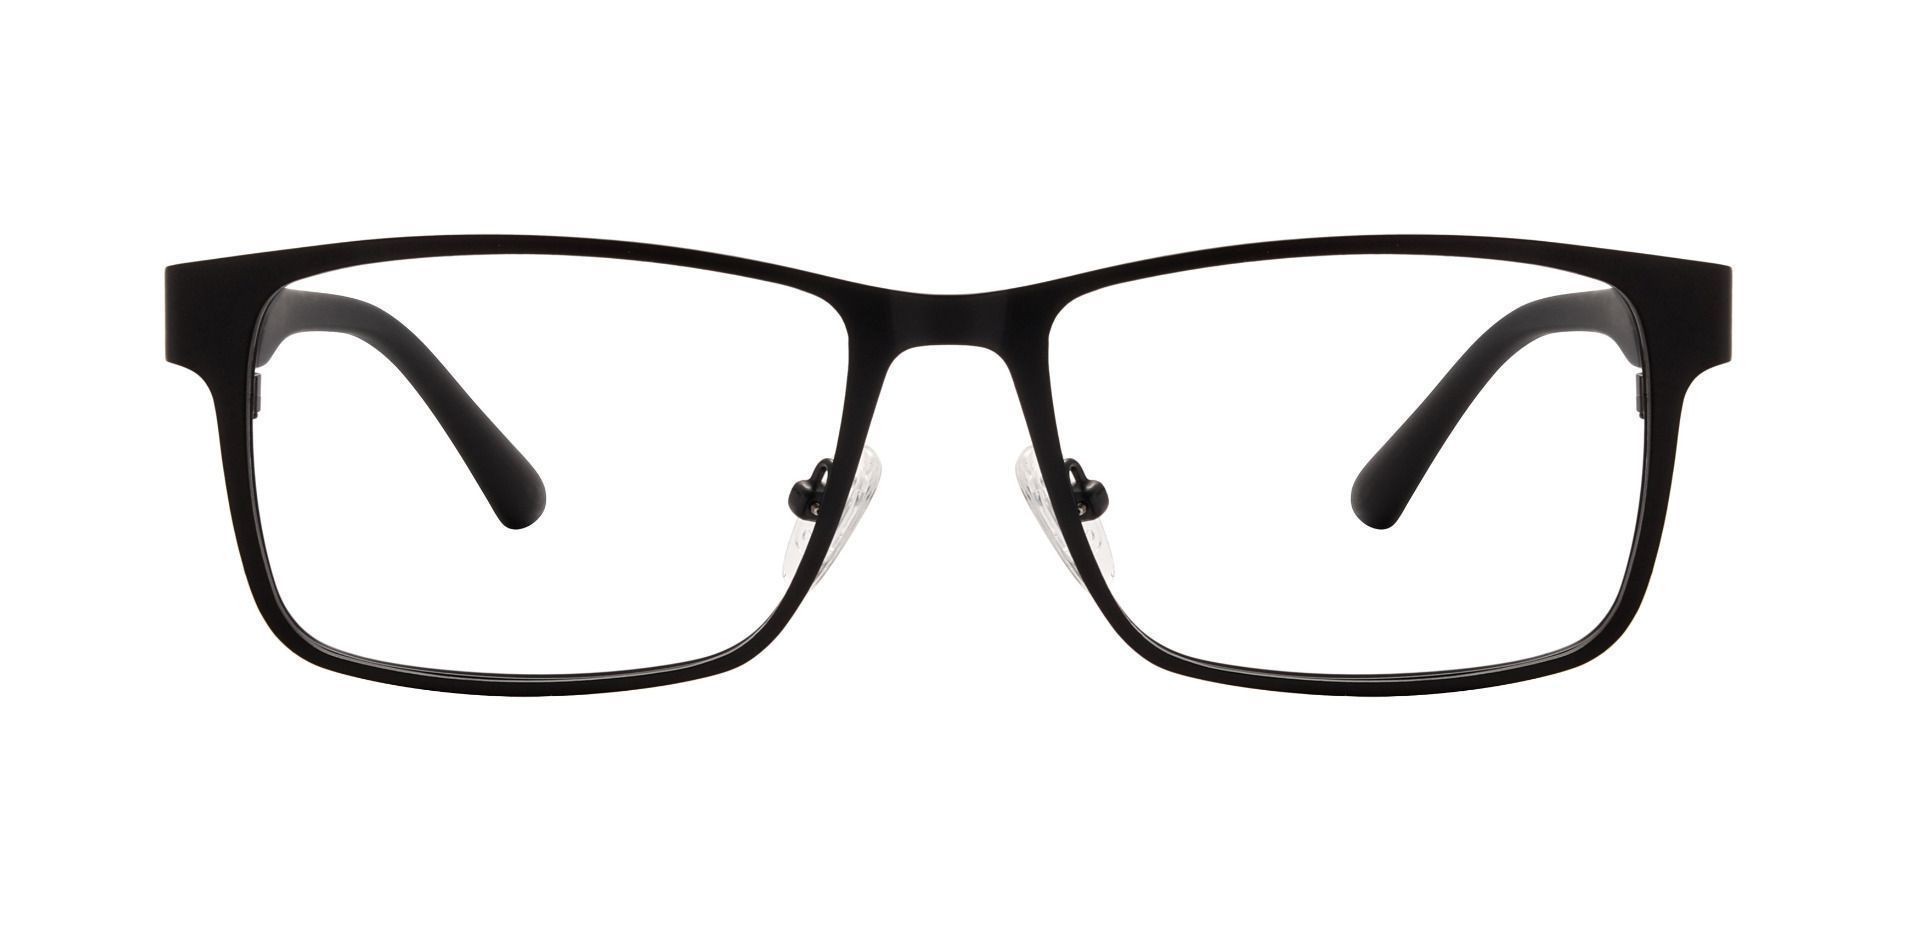 Ladson Rectangle Prescription Glasses - Black | Women's Eyeglasses ...